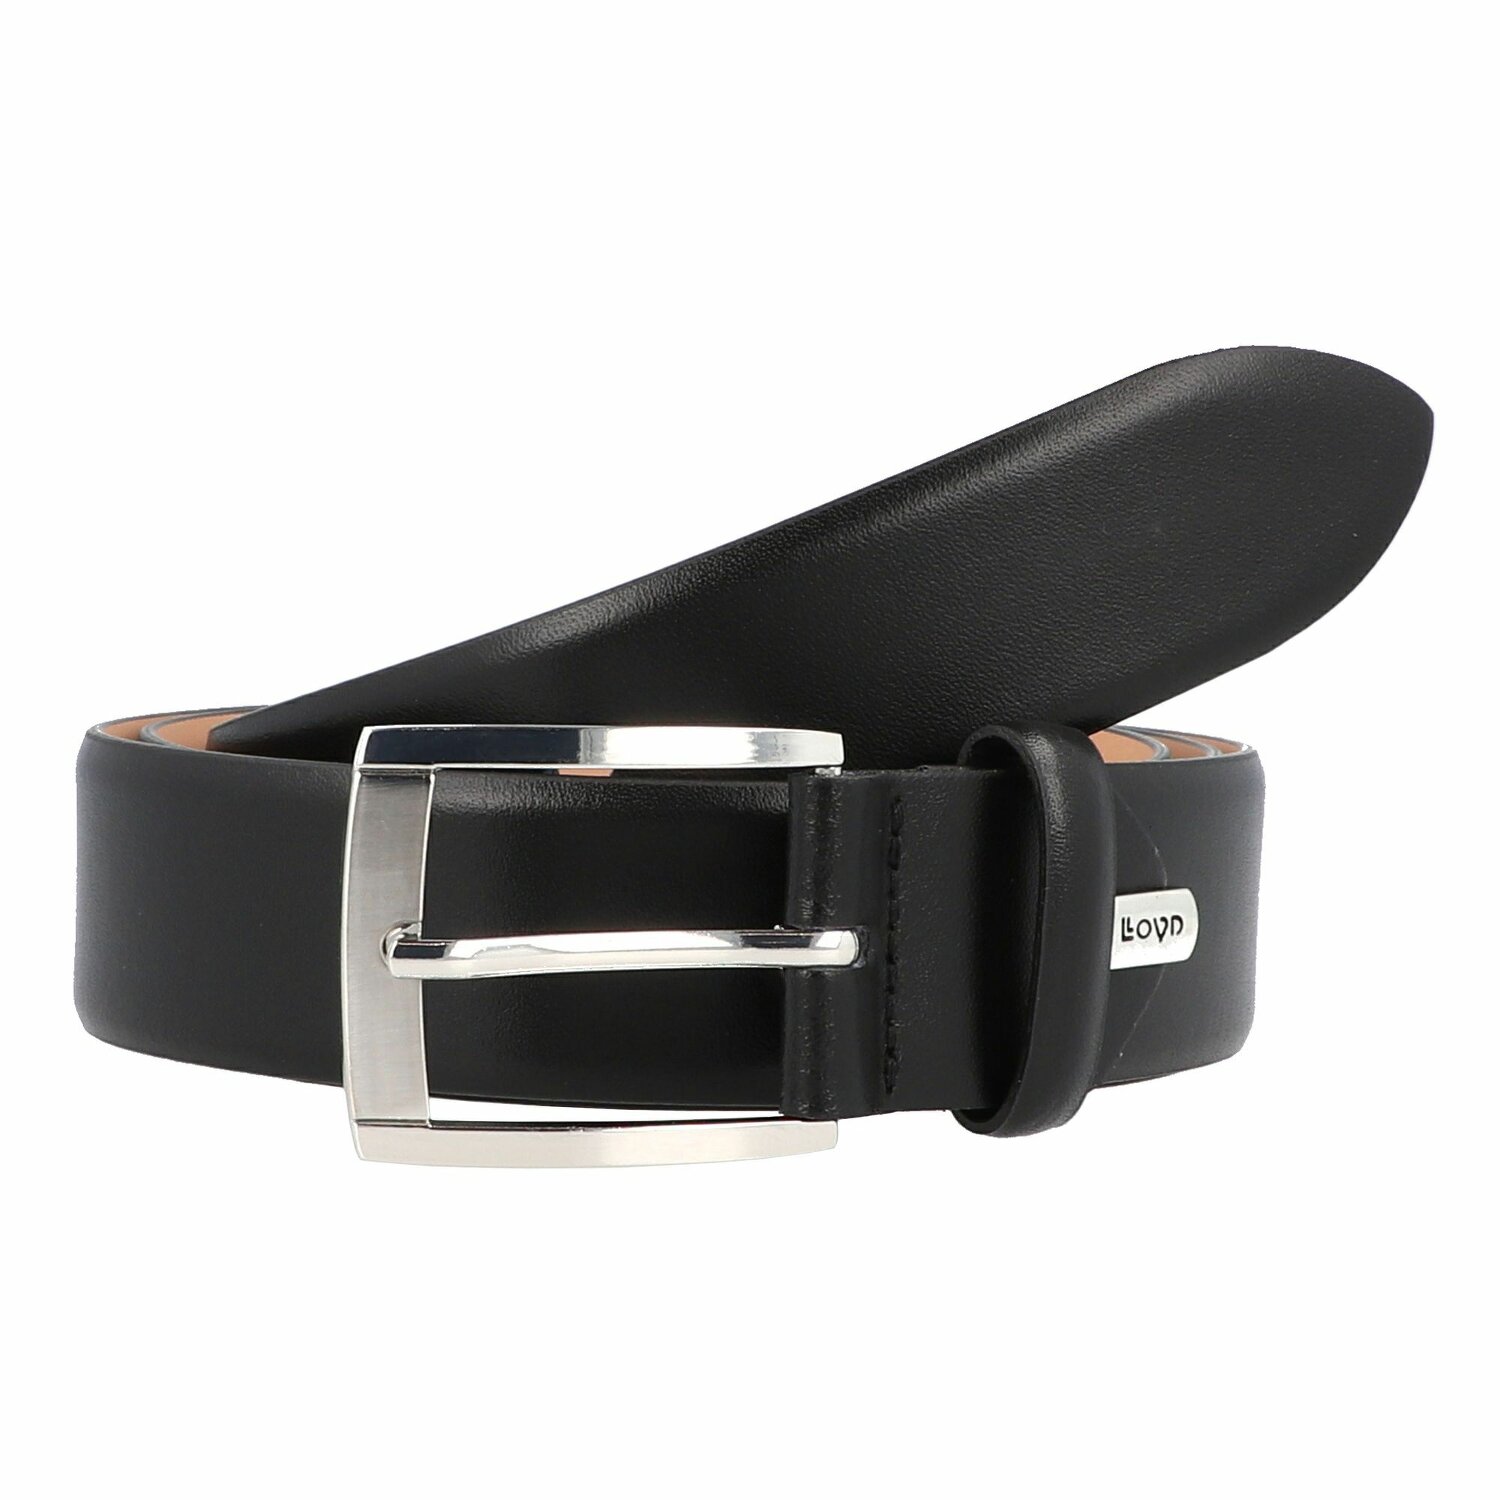 Lloyd Men's Belts Gürtel Leder schwarz | 105 cm